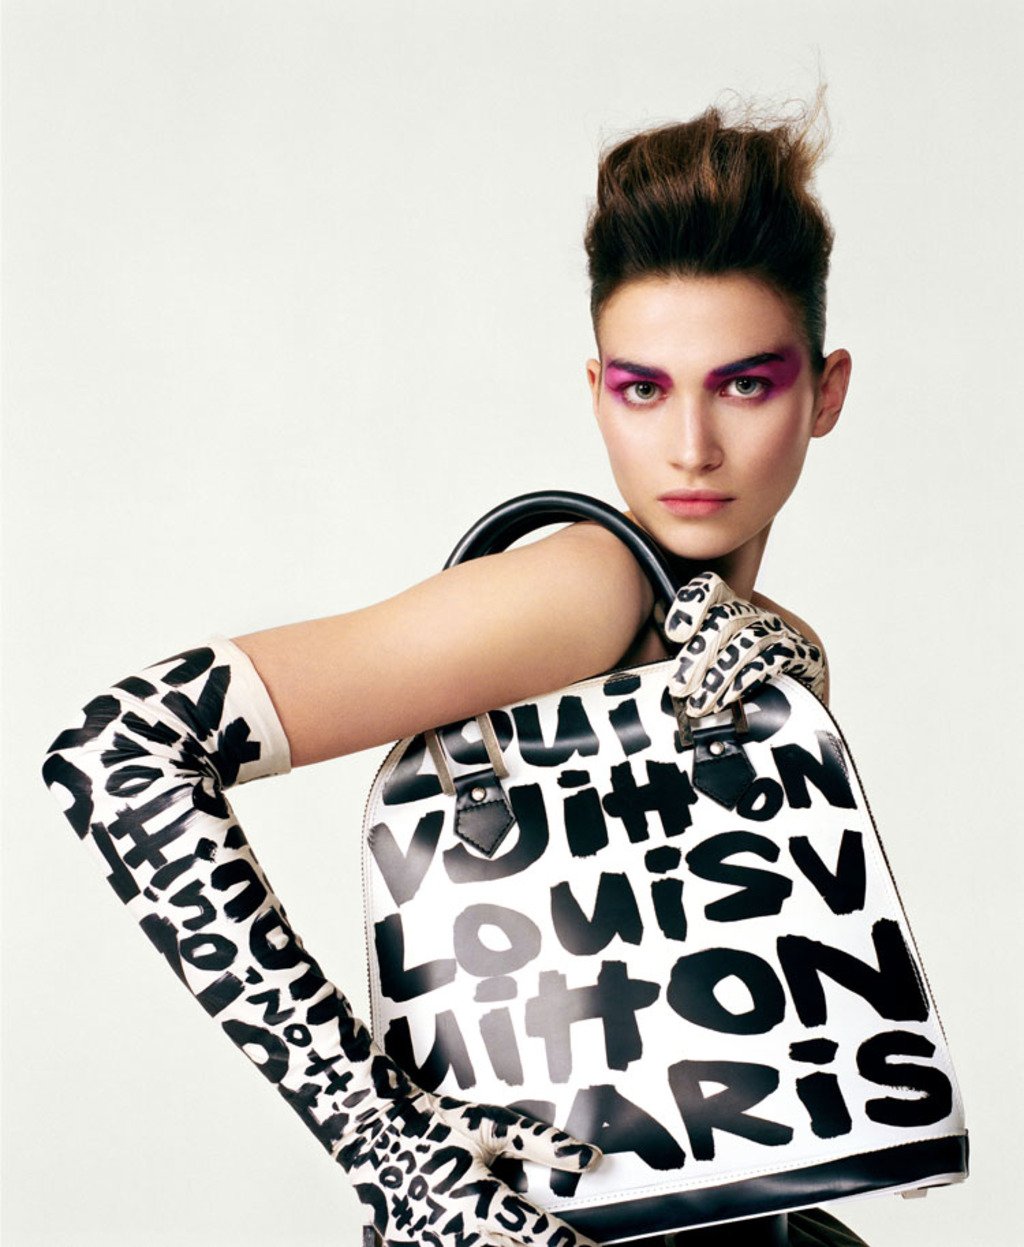 Marc Jacobs' innovative graffiti bag for Louis Vuitton (courtesy of metalocus.es)